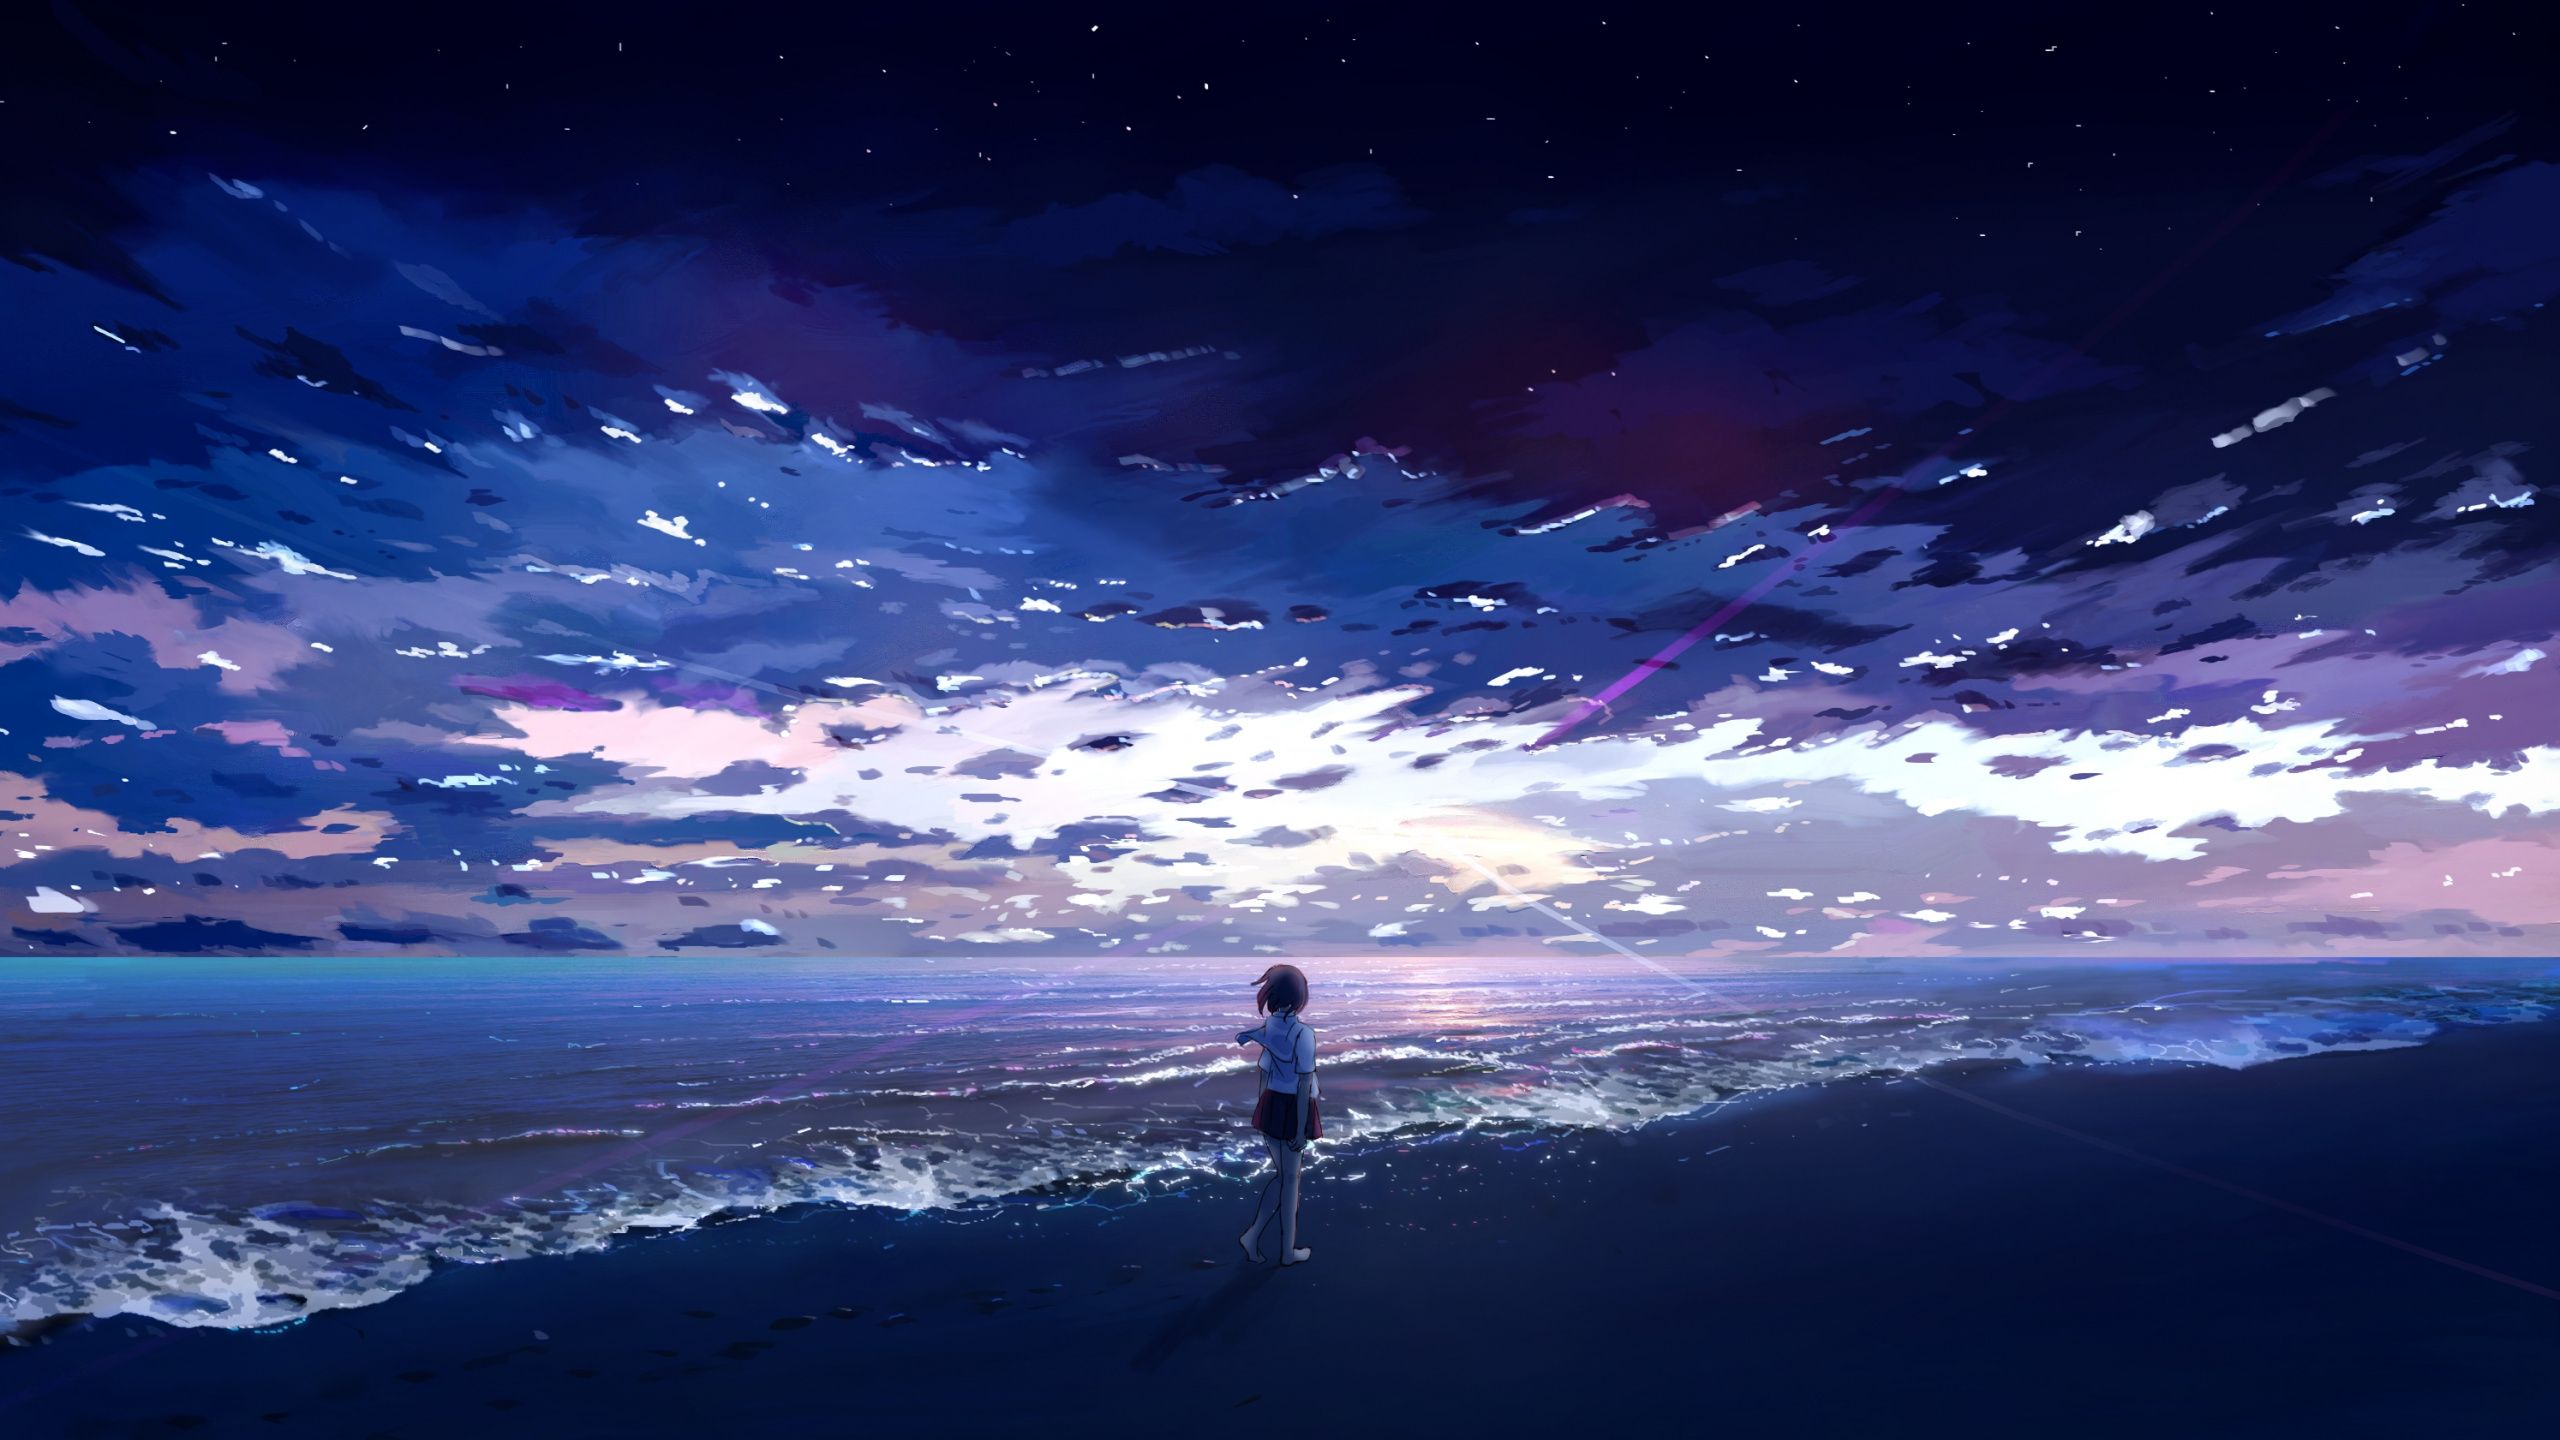 Download Anime girl, seashore, beach, art wallpaper, 2560x Dual Wide, Widescreen 16: Widescreen